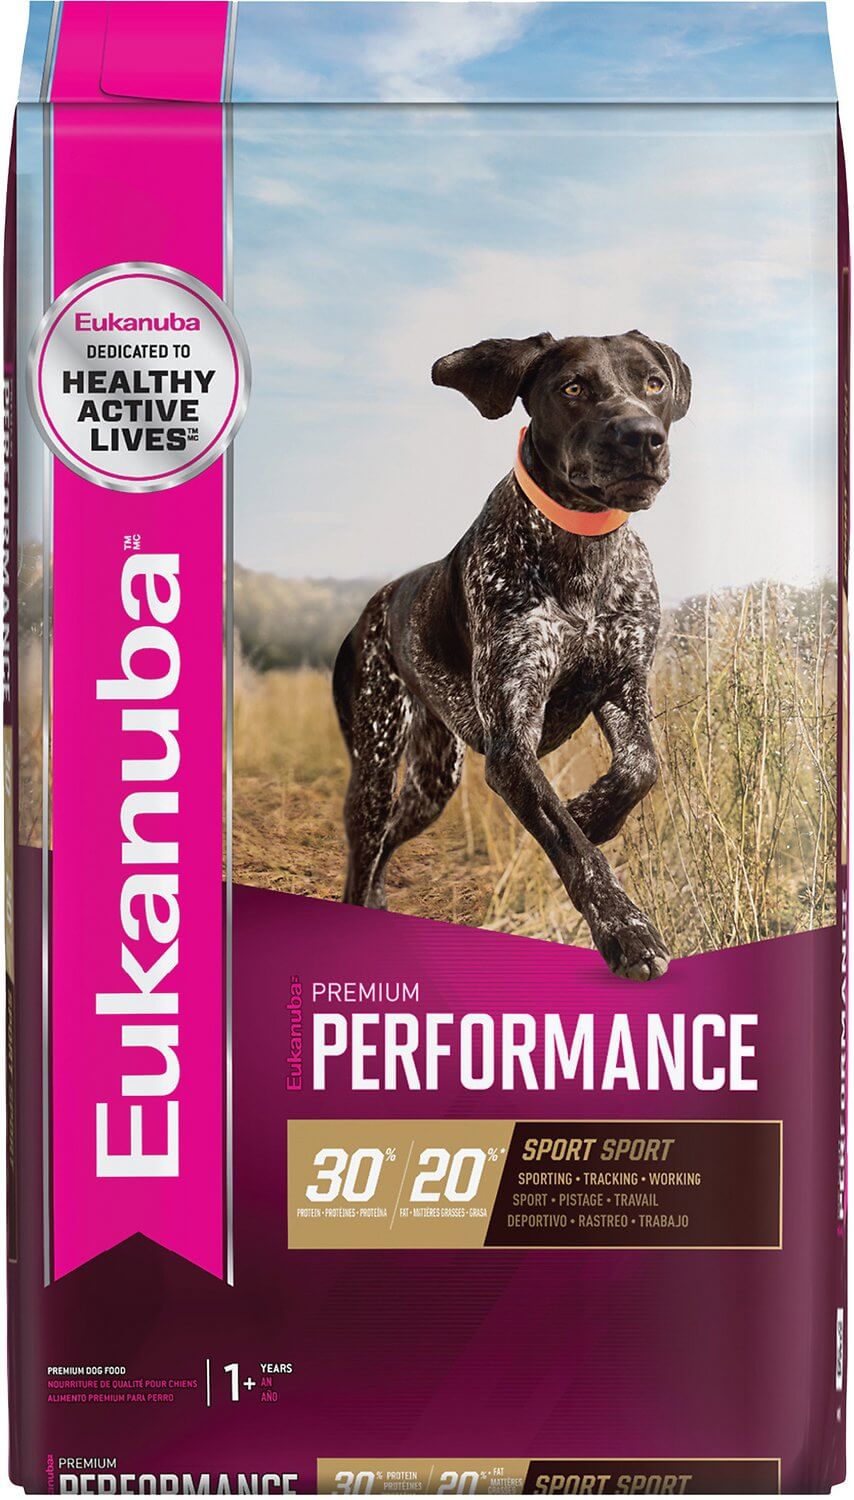 ventil hundehvalp forligsmanden Eukanuba Premium Performance Dog Food | Review | Rating | Recalls